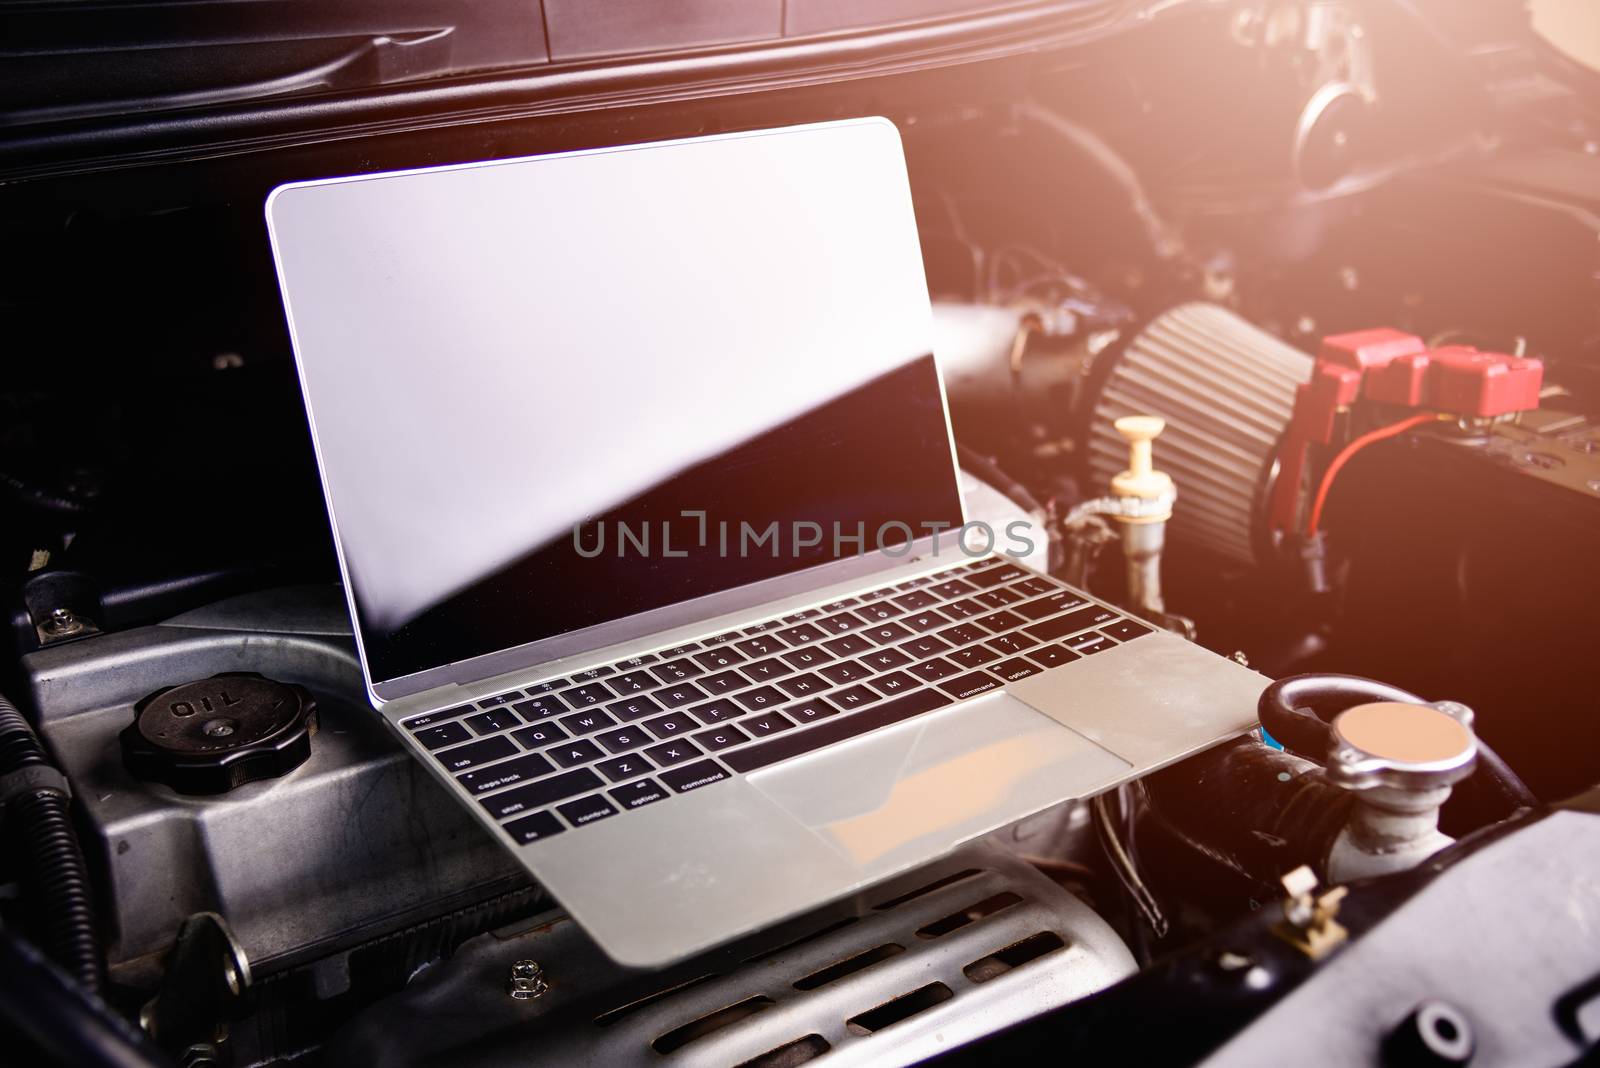 Professional car repair or maintenance mechanic engine working s by Sorapop